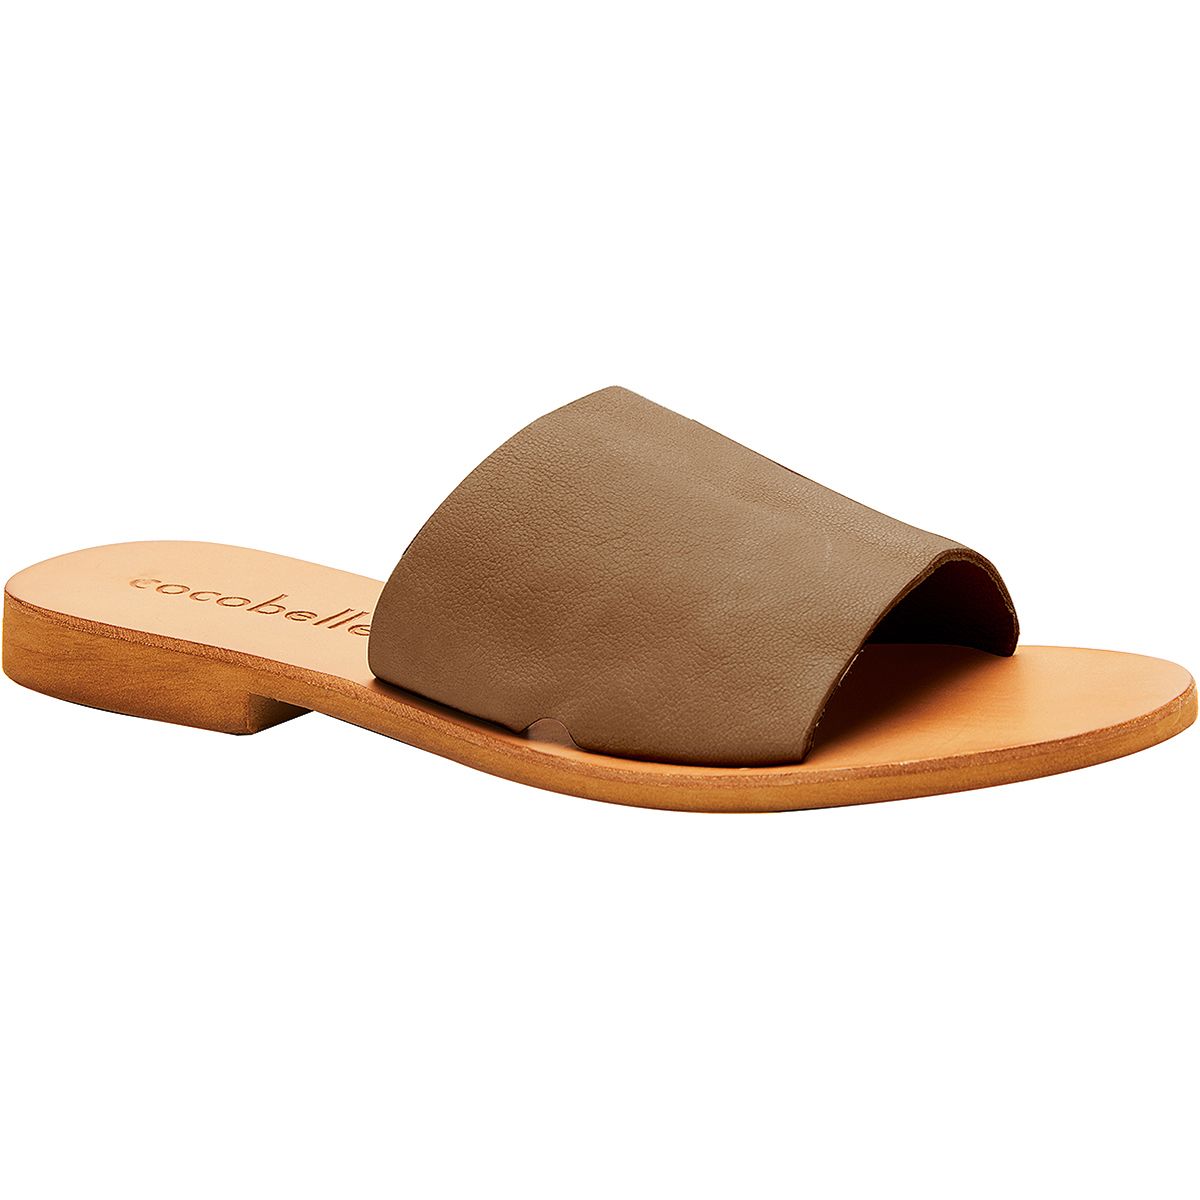 Cocobelle Women`s Sandals Bhea Italian Leather Slide Sandal Gray Straps NWT